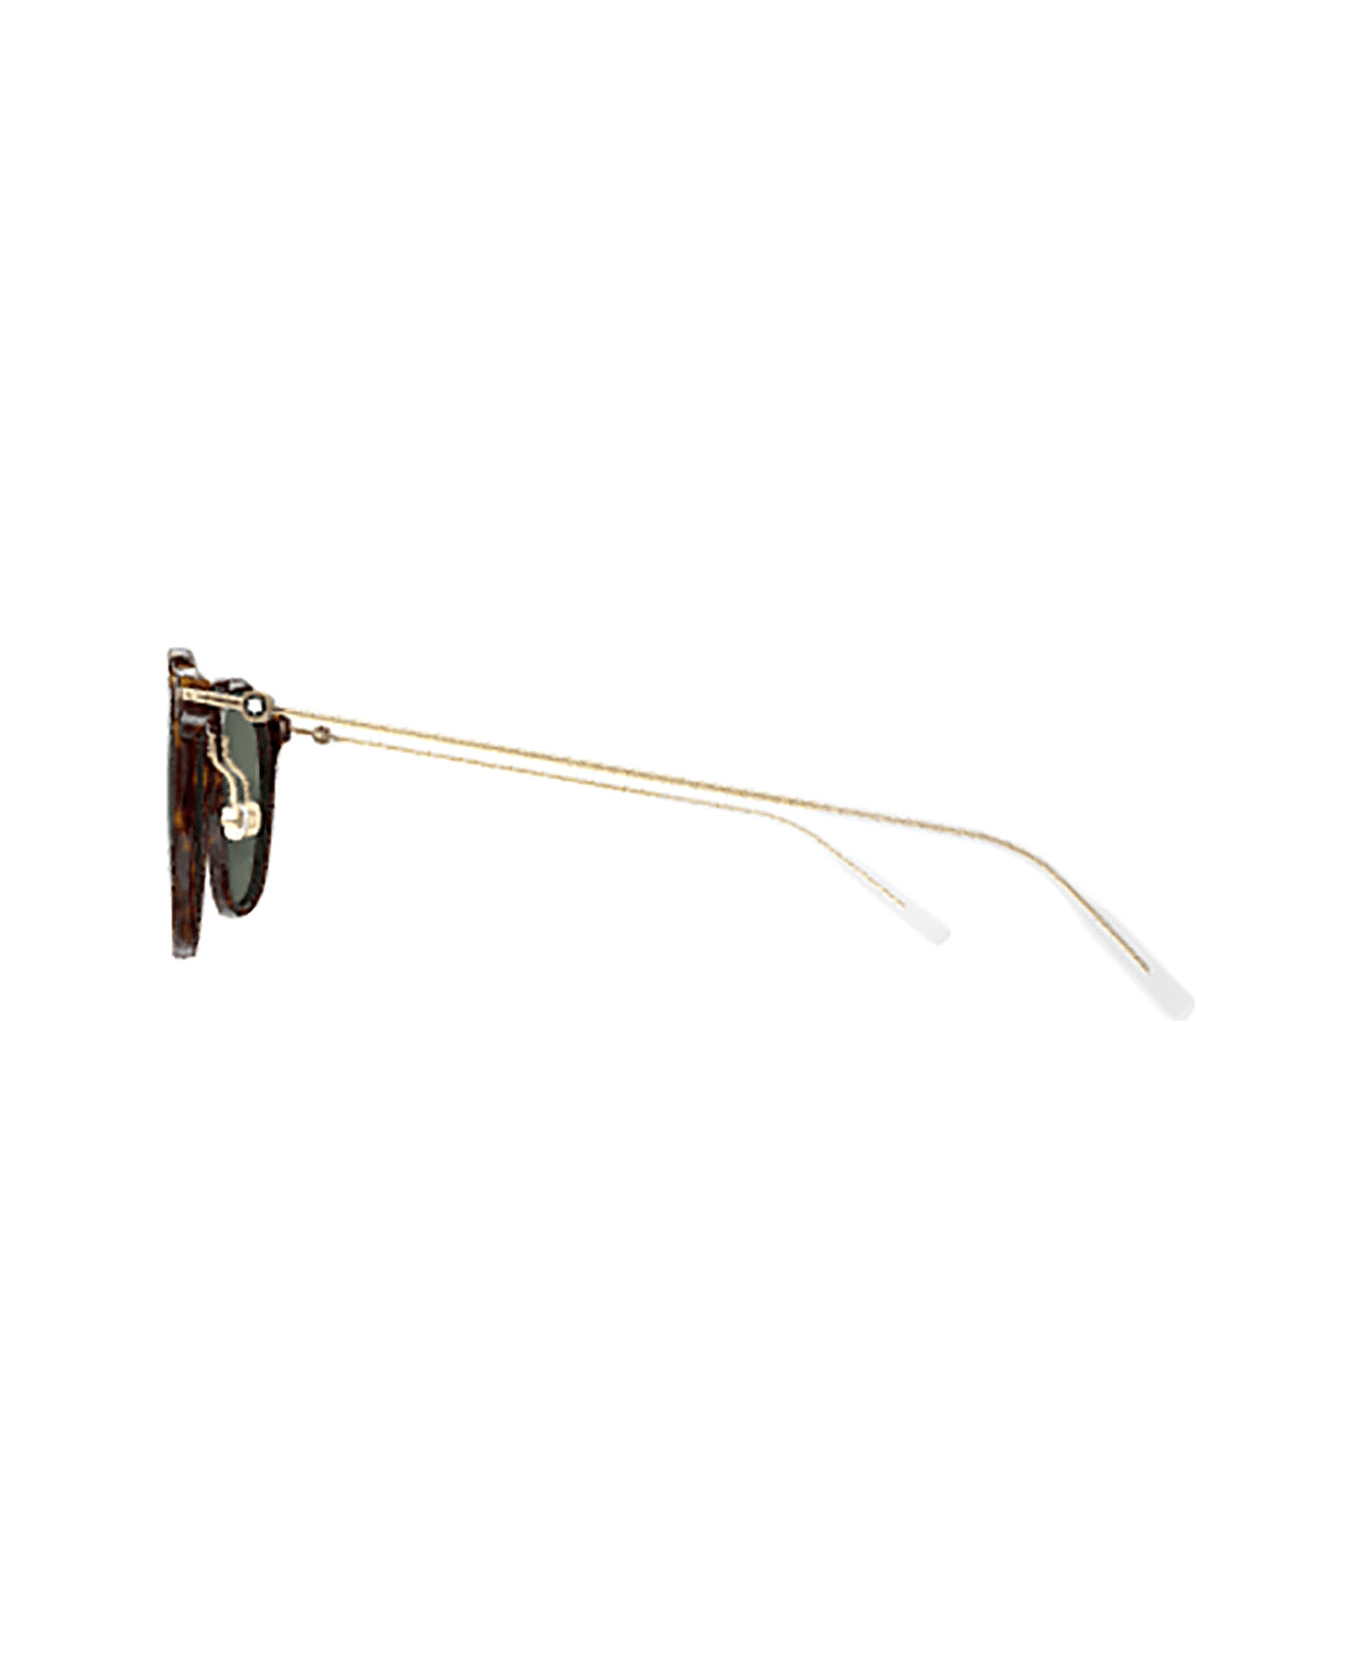 Montblanc MB0098S Sunglasses - Havana Gold Green サングラス